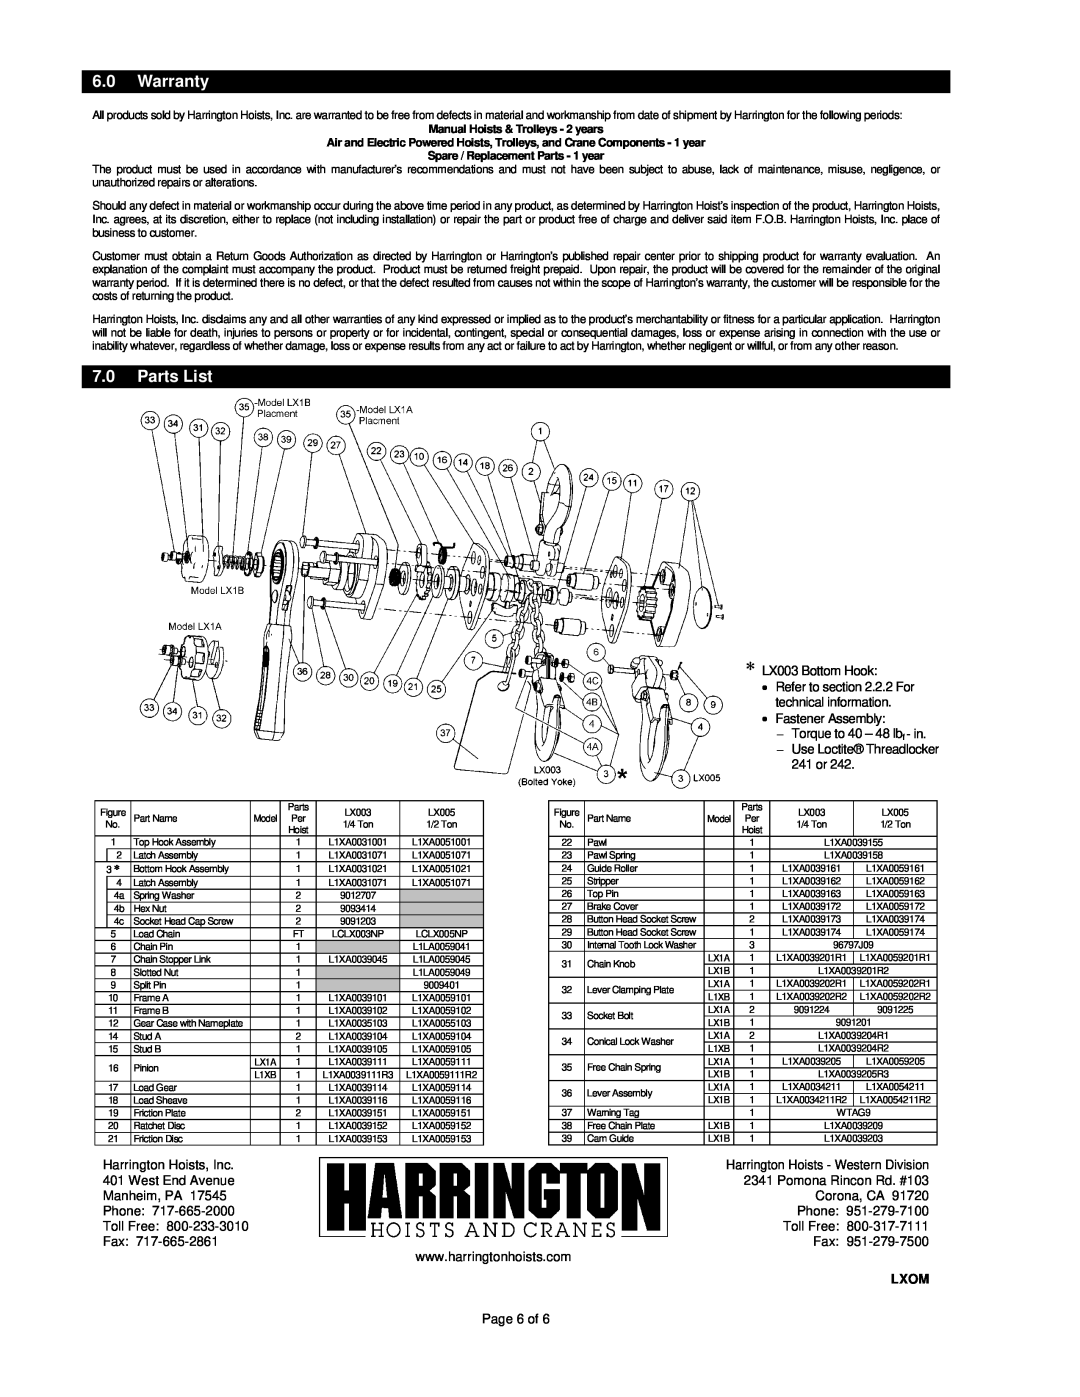 Harrington Hoists LXOM warranty Warranty, Parts List, Lxom 